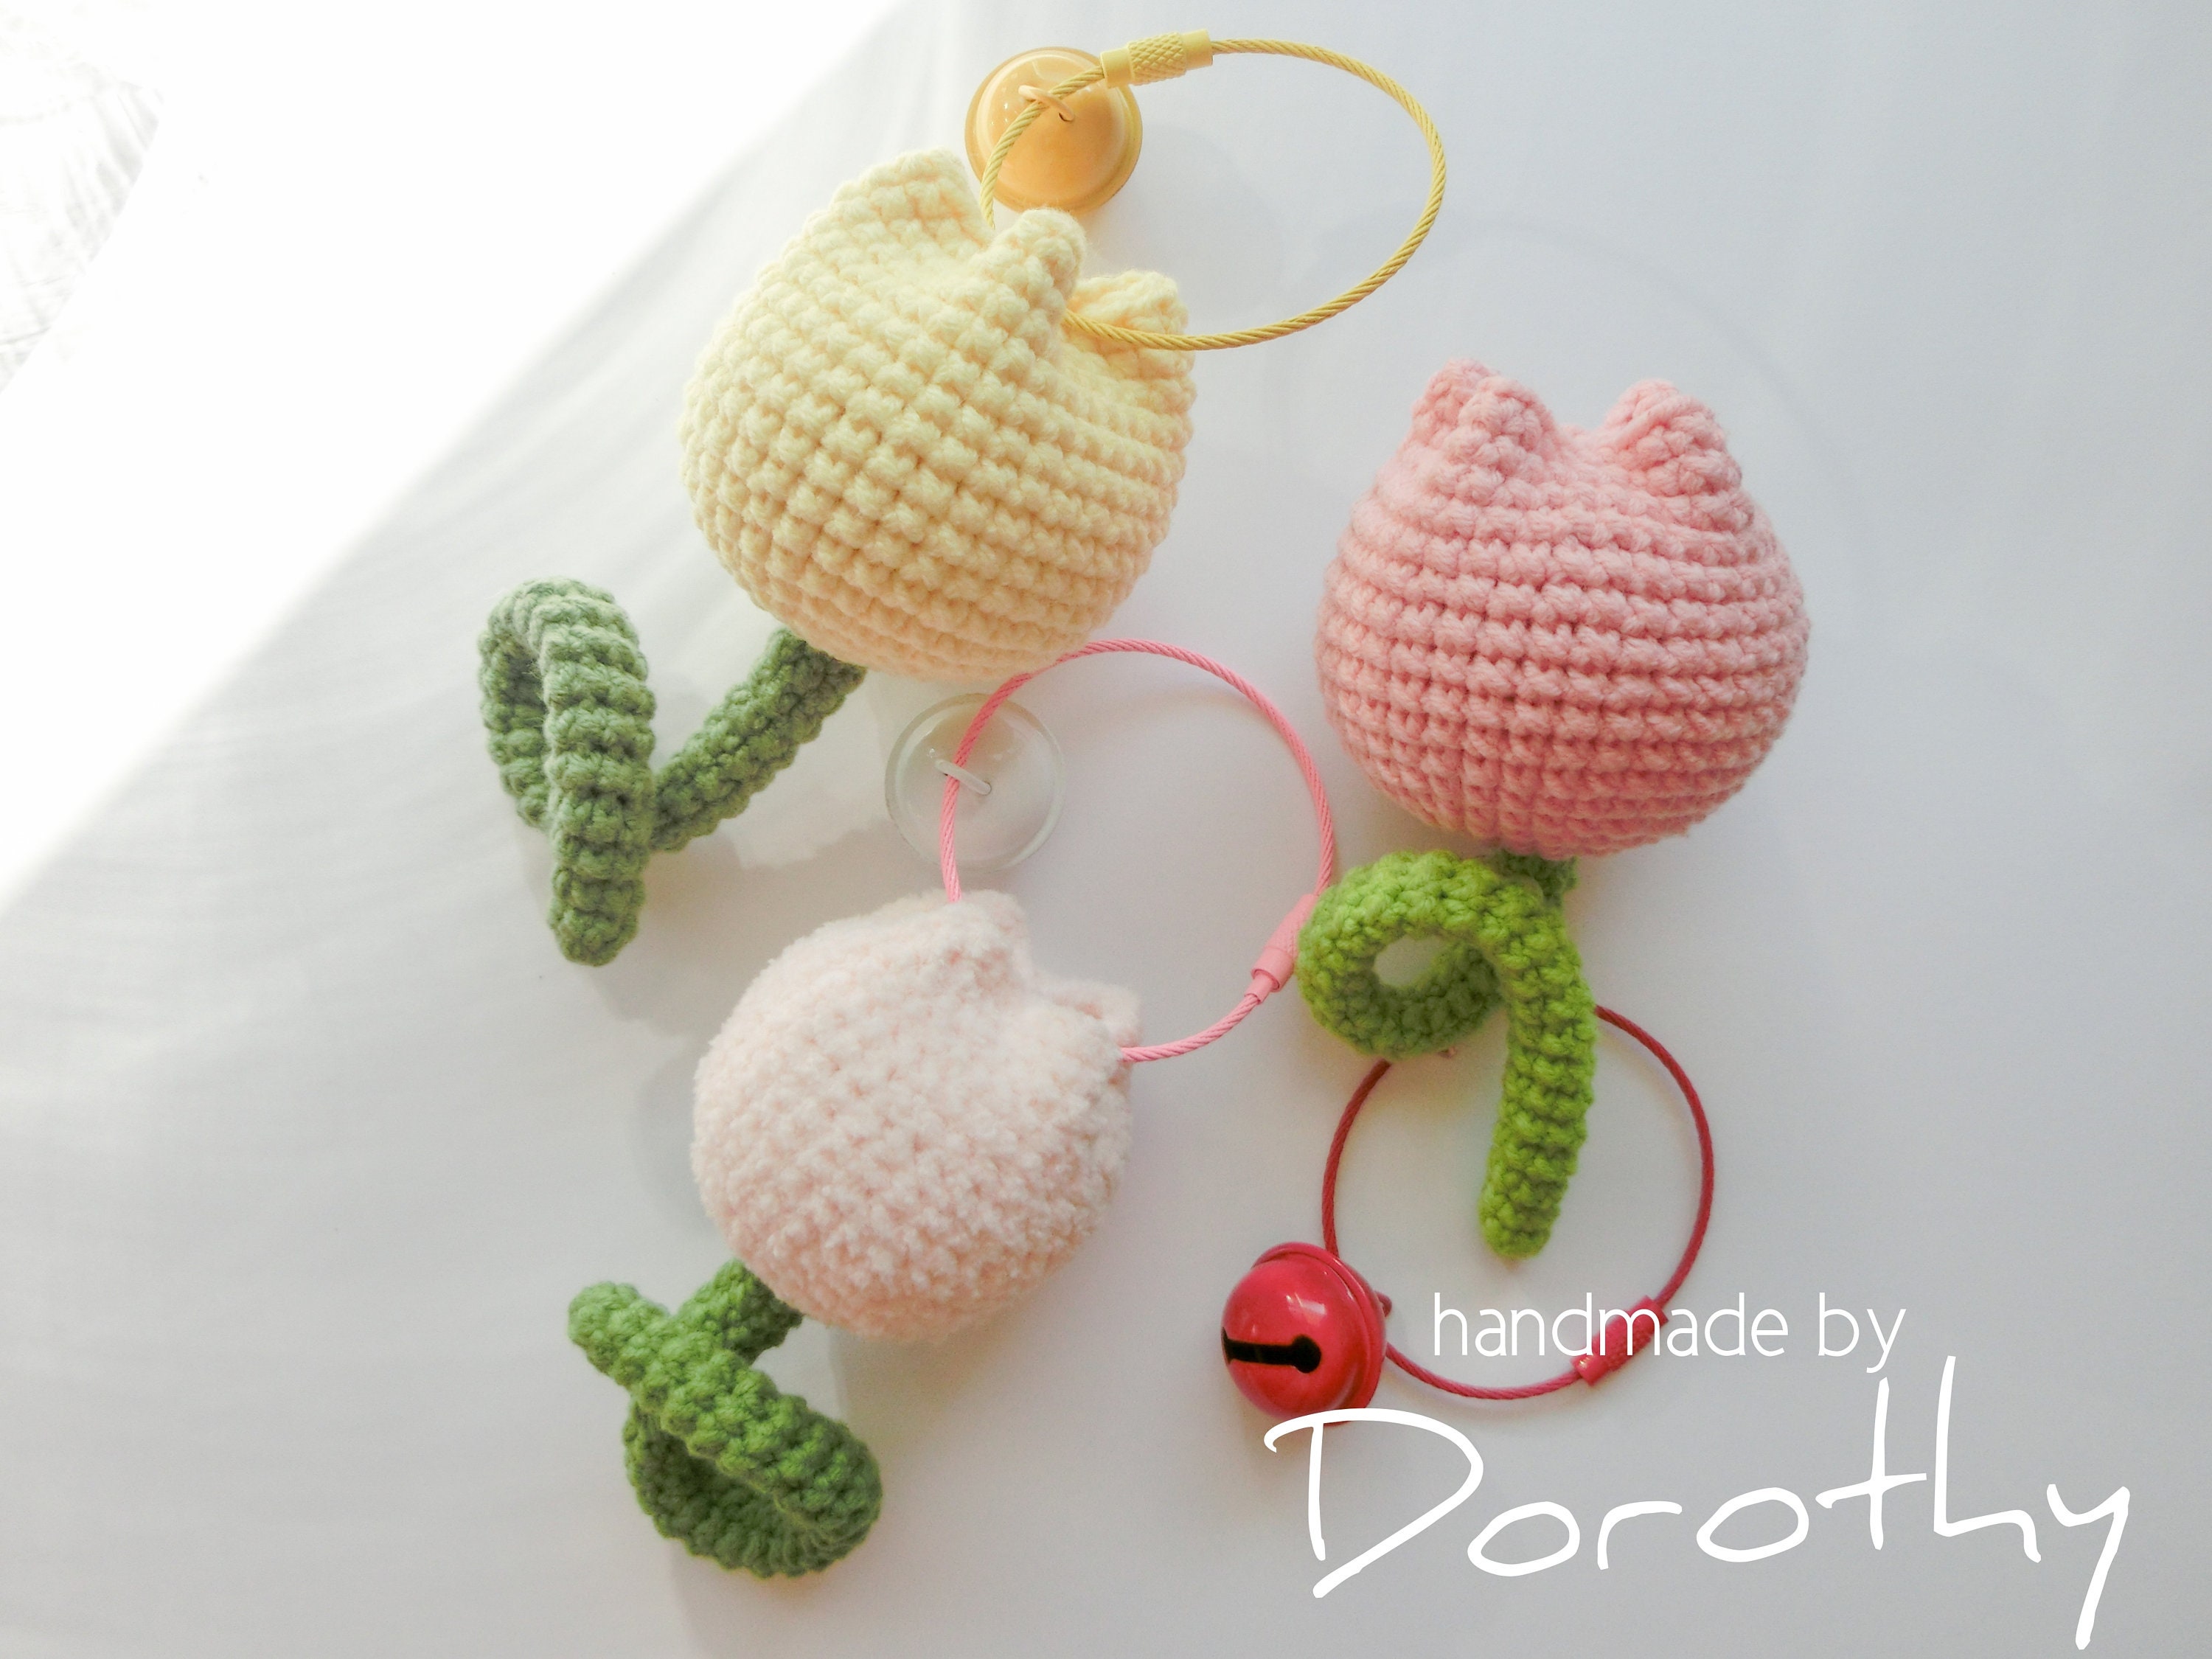 Crochet keychain 🌸, How to make a crochet Flower keychain